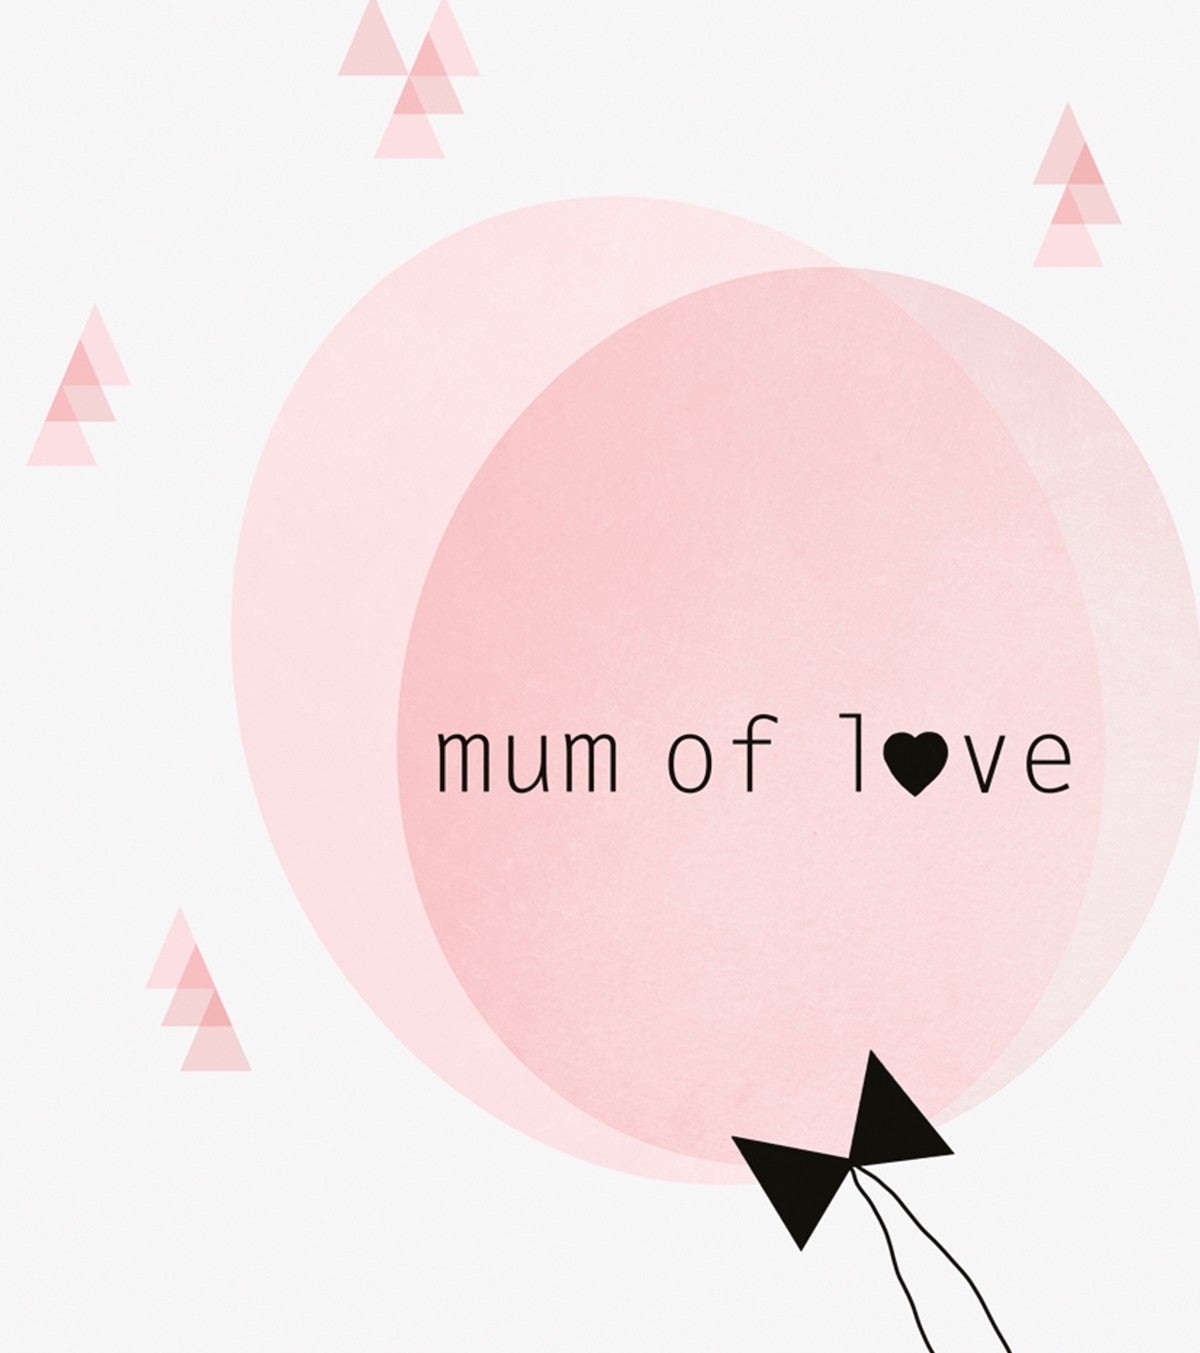 MUM OF LOVE - Affiche enfant - Mum of love